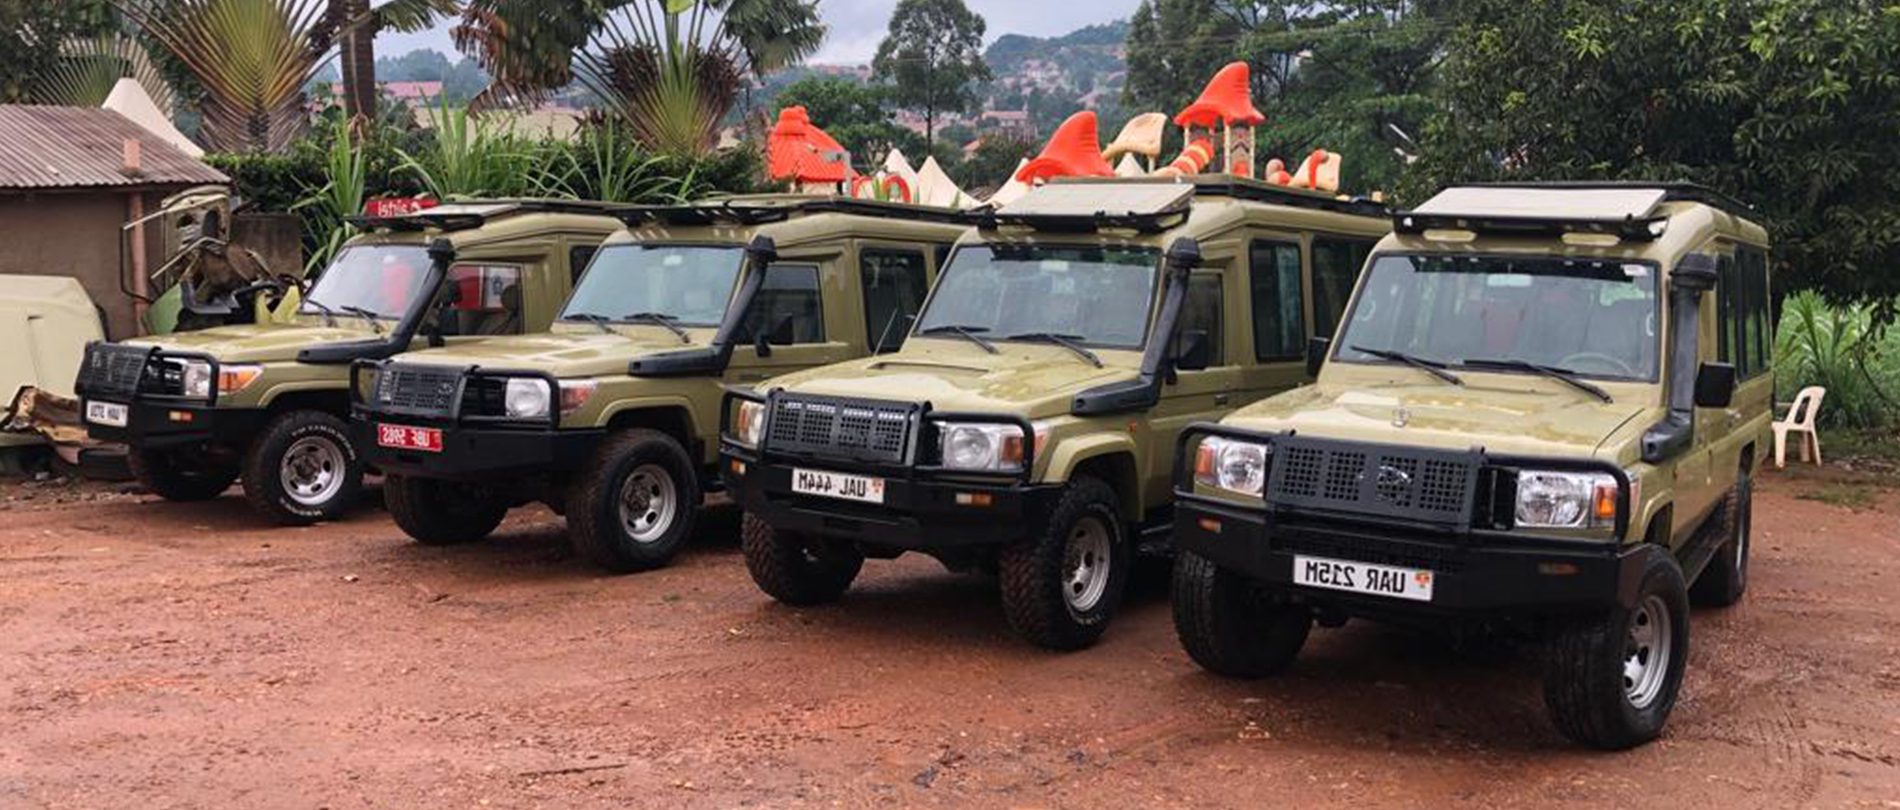 Safari vehicles game drives